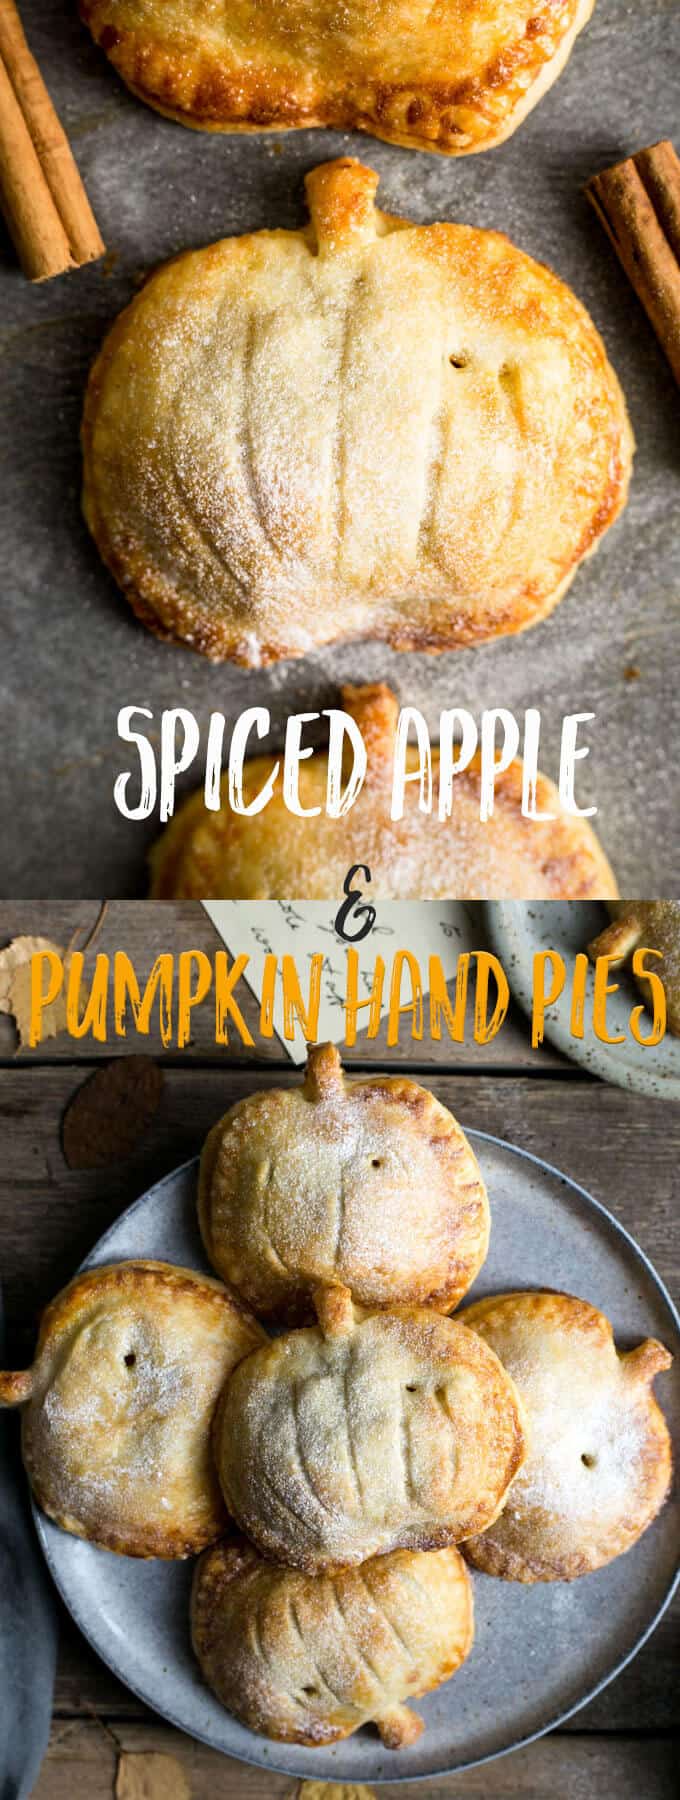 Spiced apple and pumpkin hand pies recipe #vegan #pie | via @annabanana.co